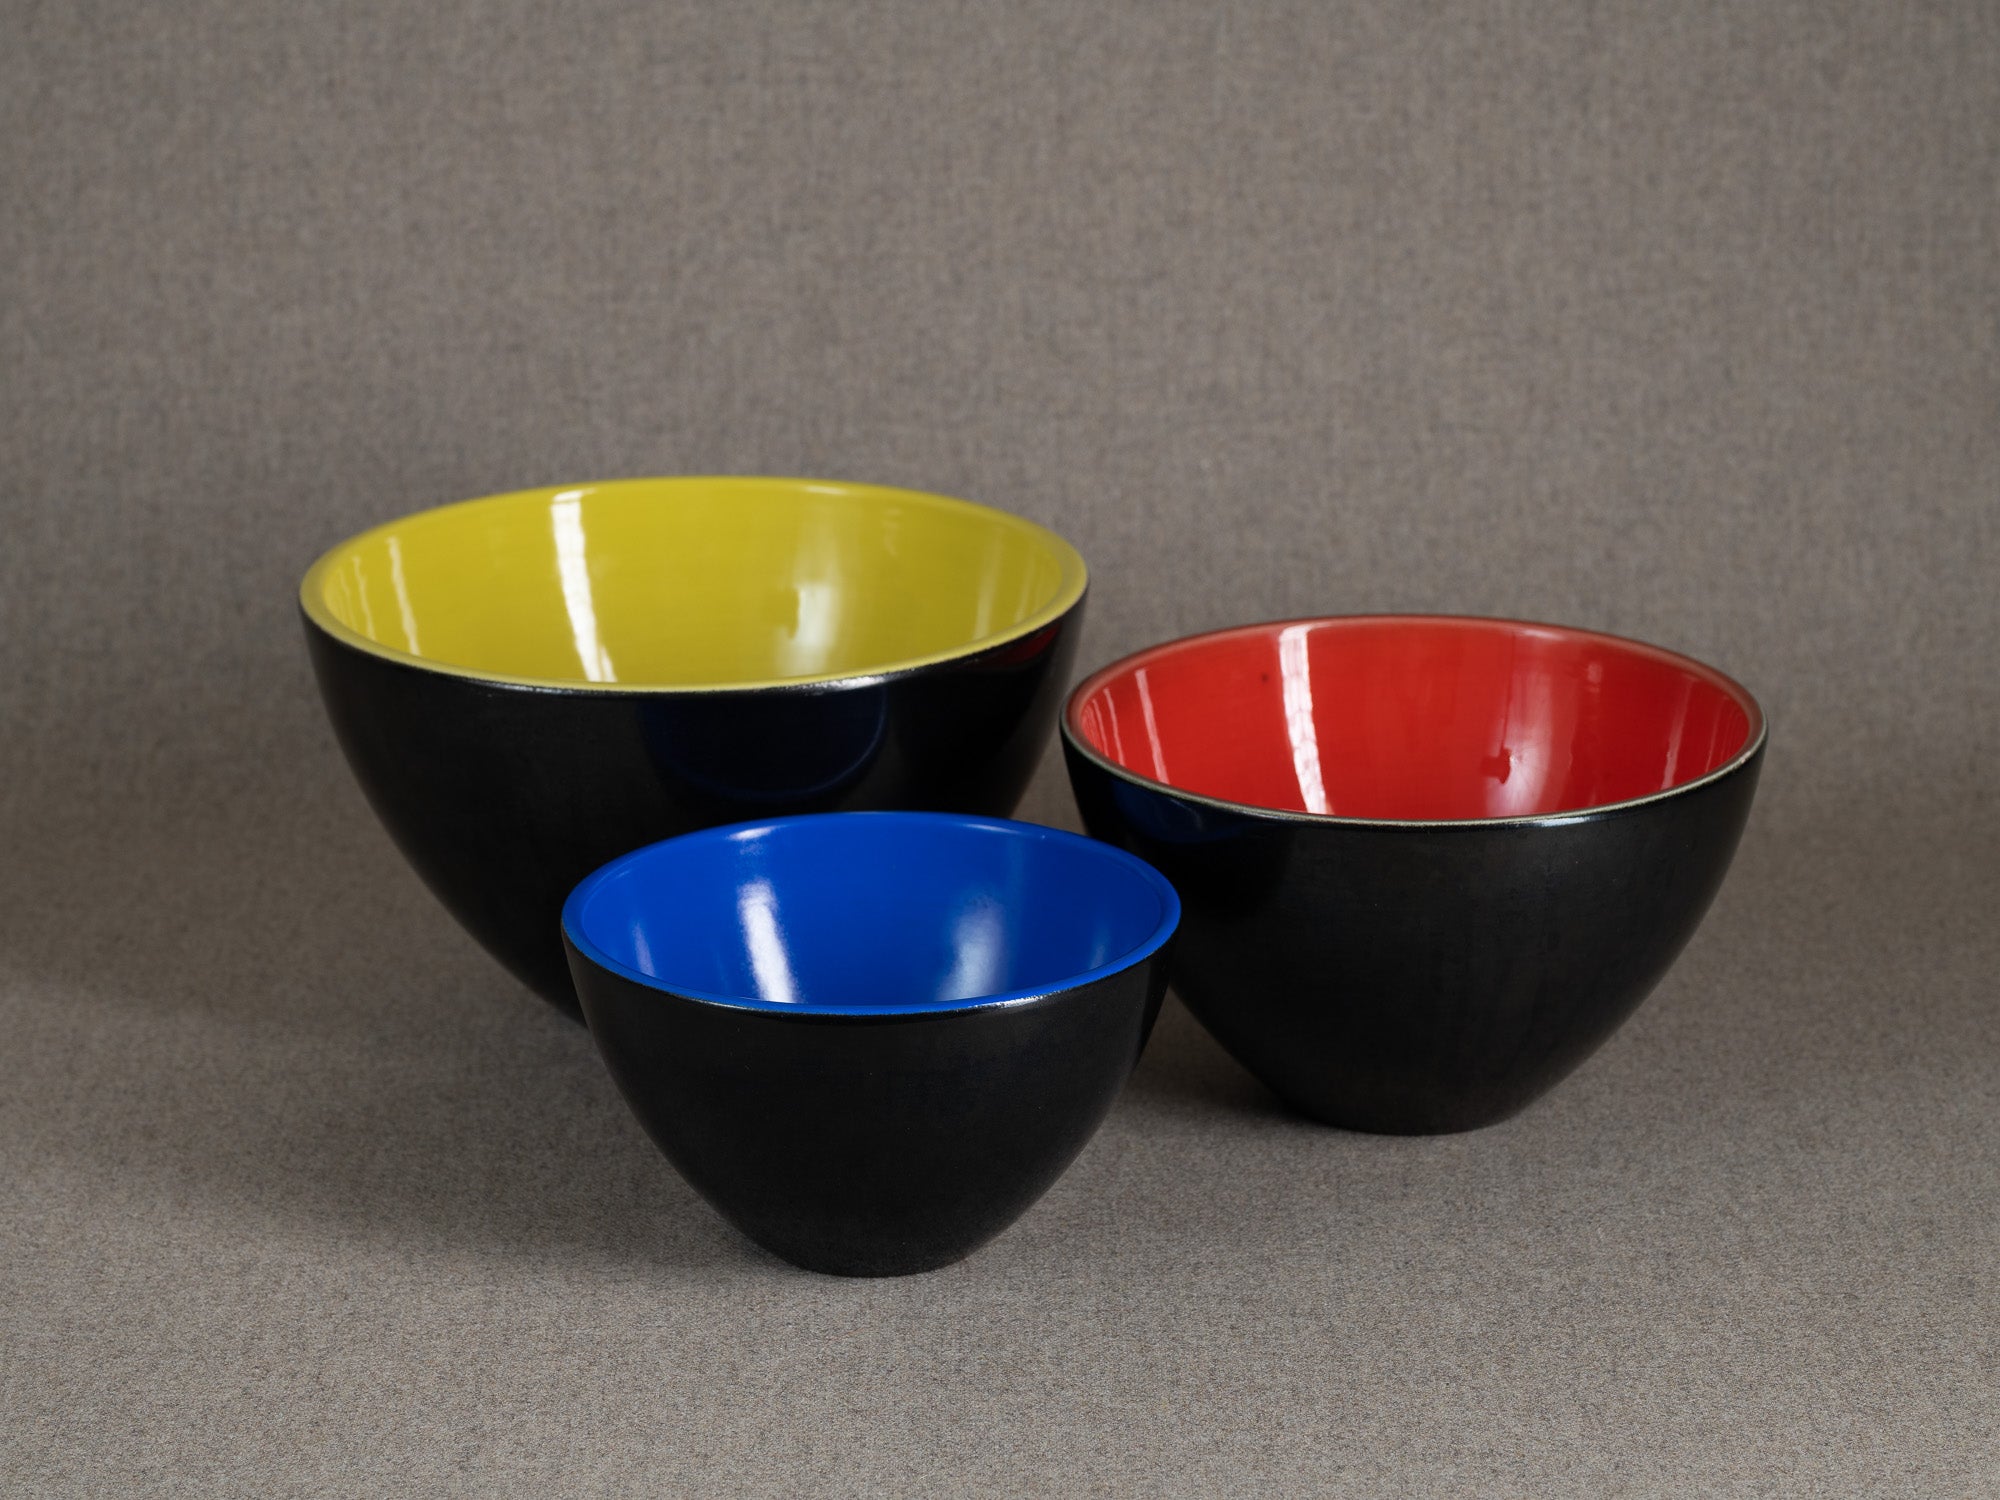 Suite de coupes gigognes "constructivistes" par Fernand Elchinger à Soufflenheim, France (vers 1955-58)..Set of 3 "bauhaus" bowls by Fernand Elchinger in Soufflenheim, France (circa 1955-58)